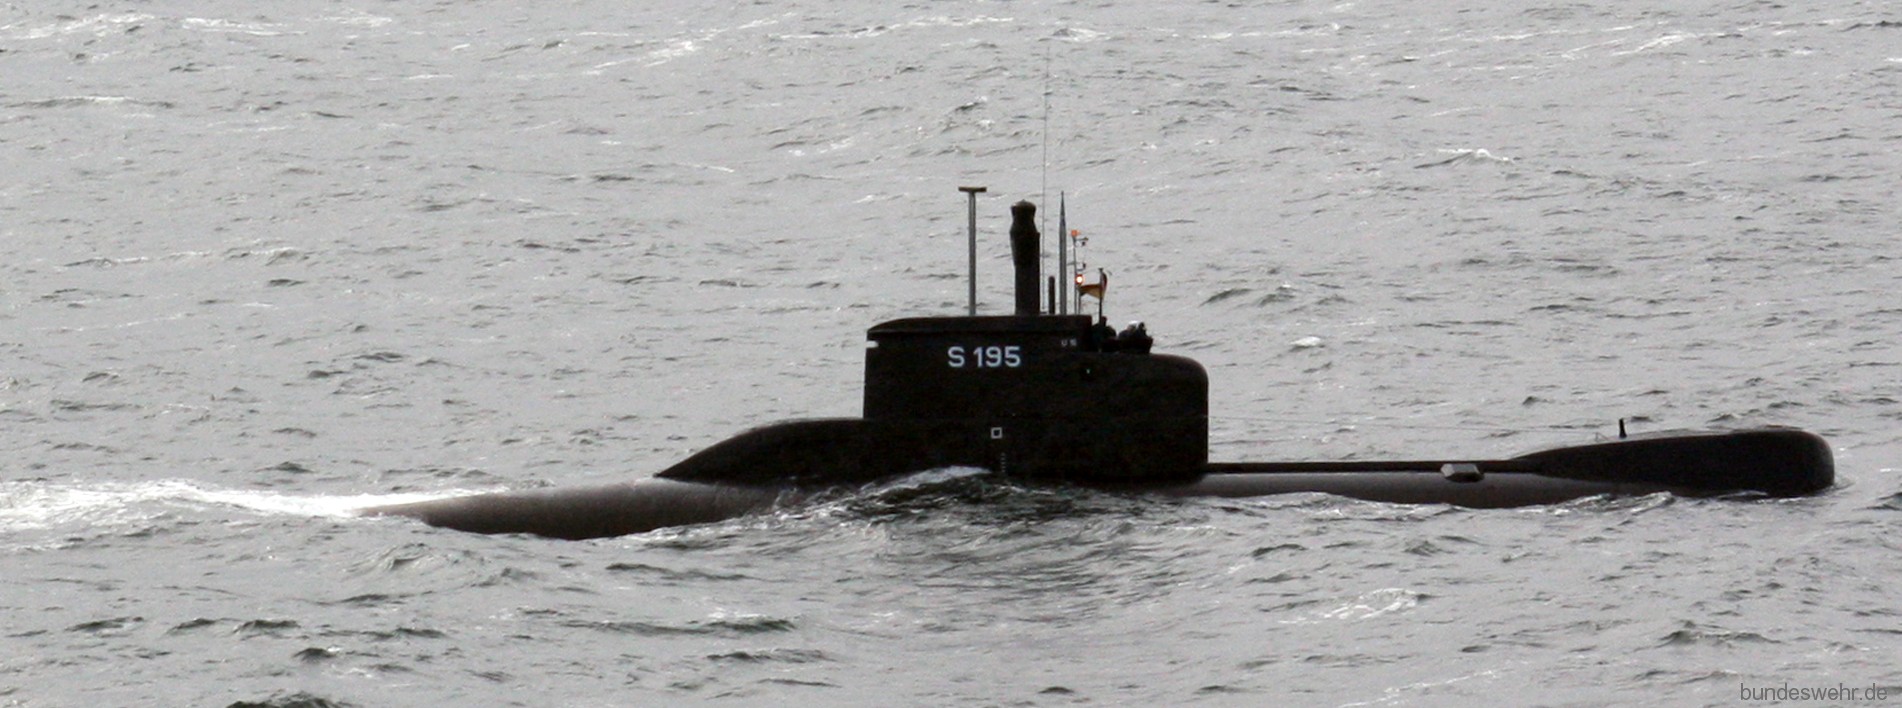 s-195 fgs u16 type 206 class submarine german navy 03